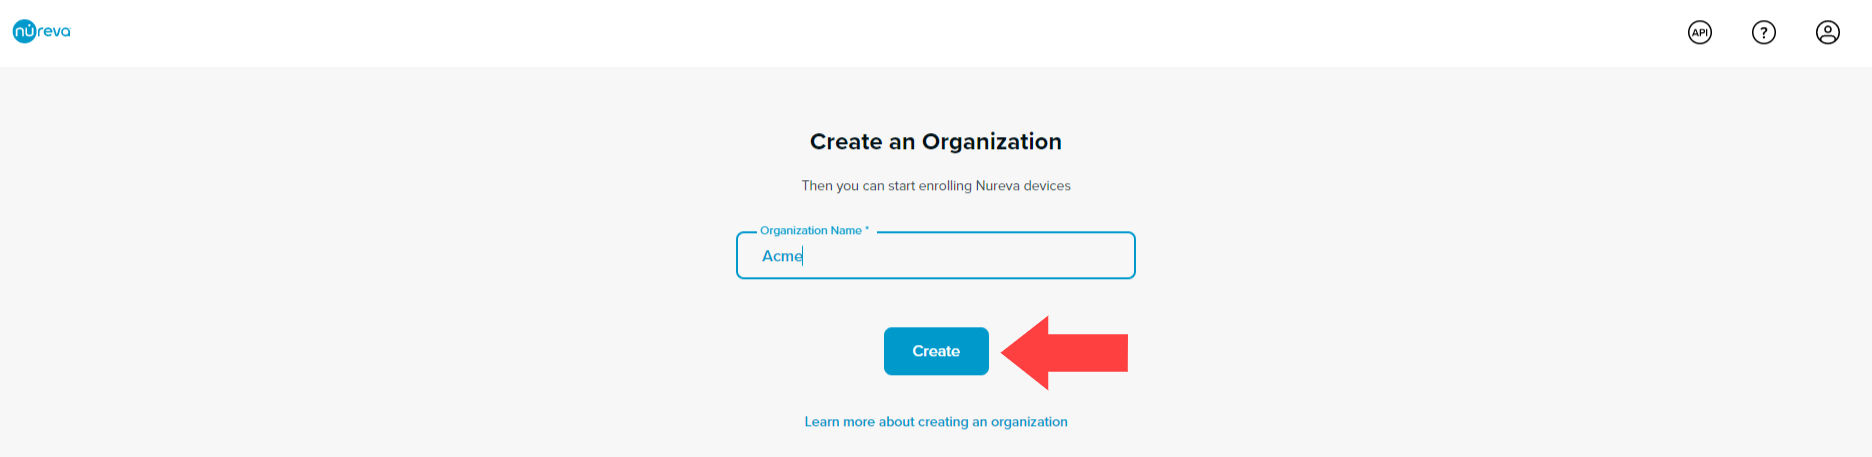 Console create organization create button